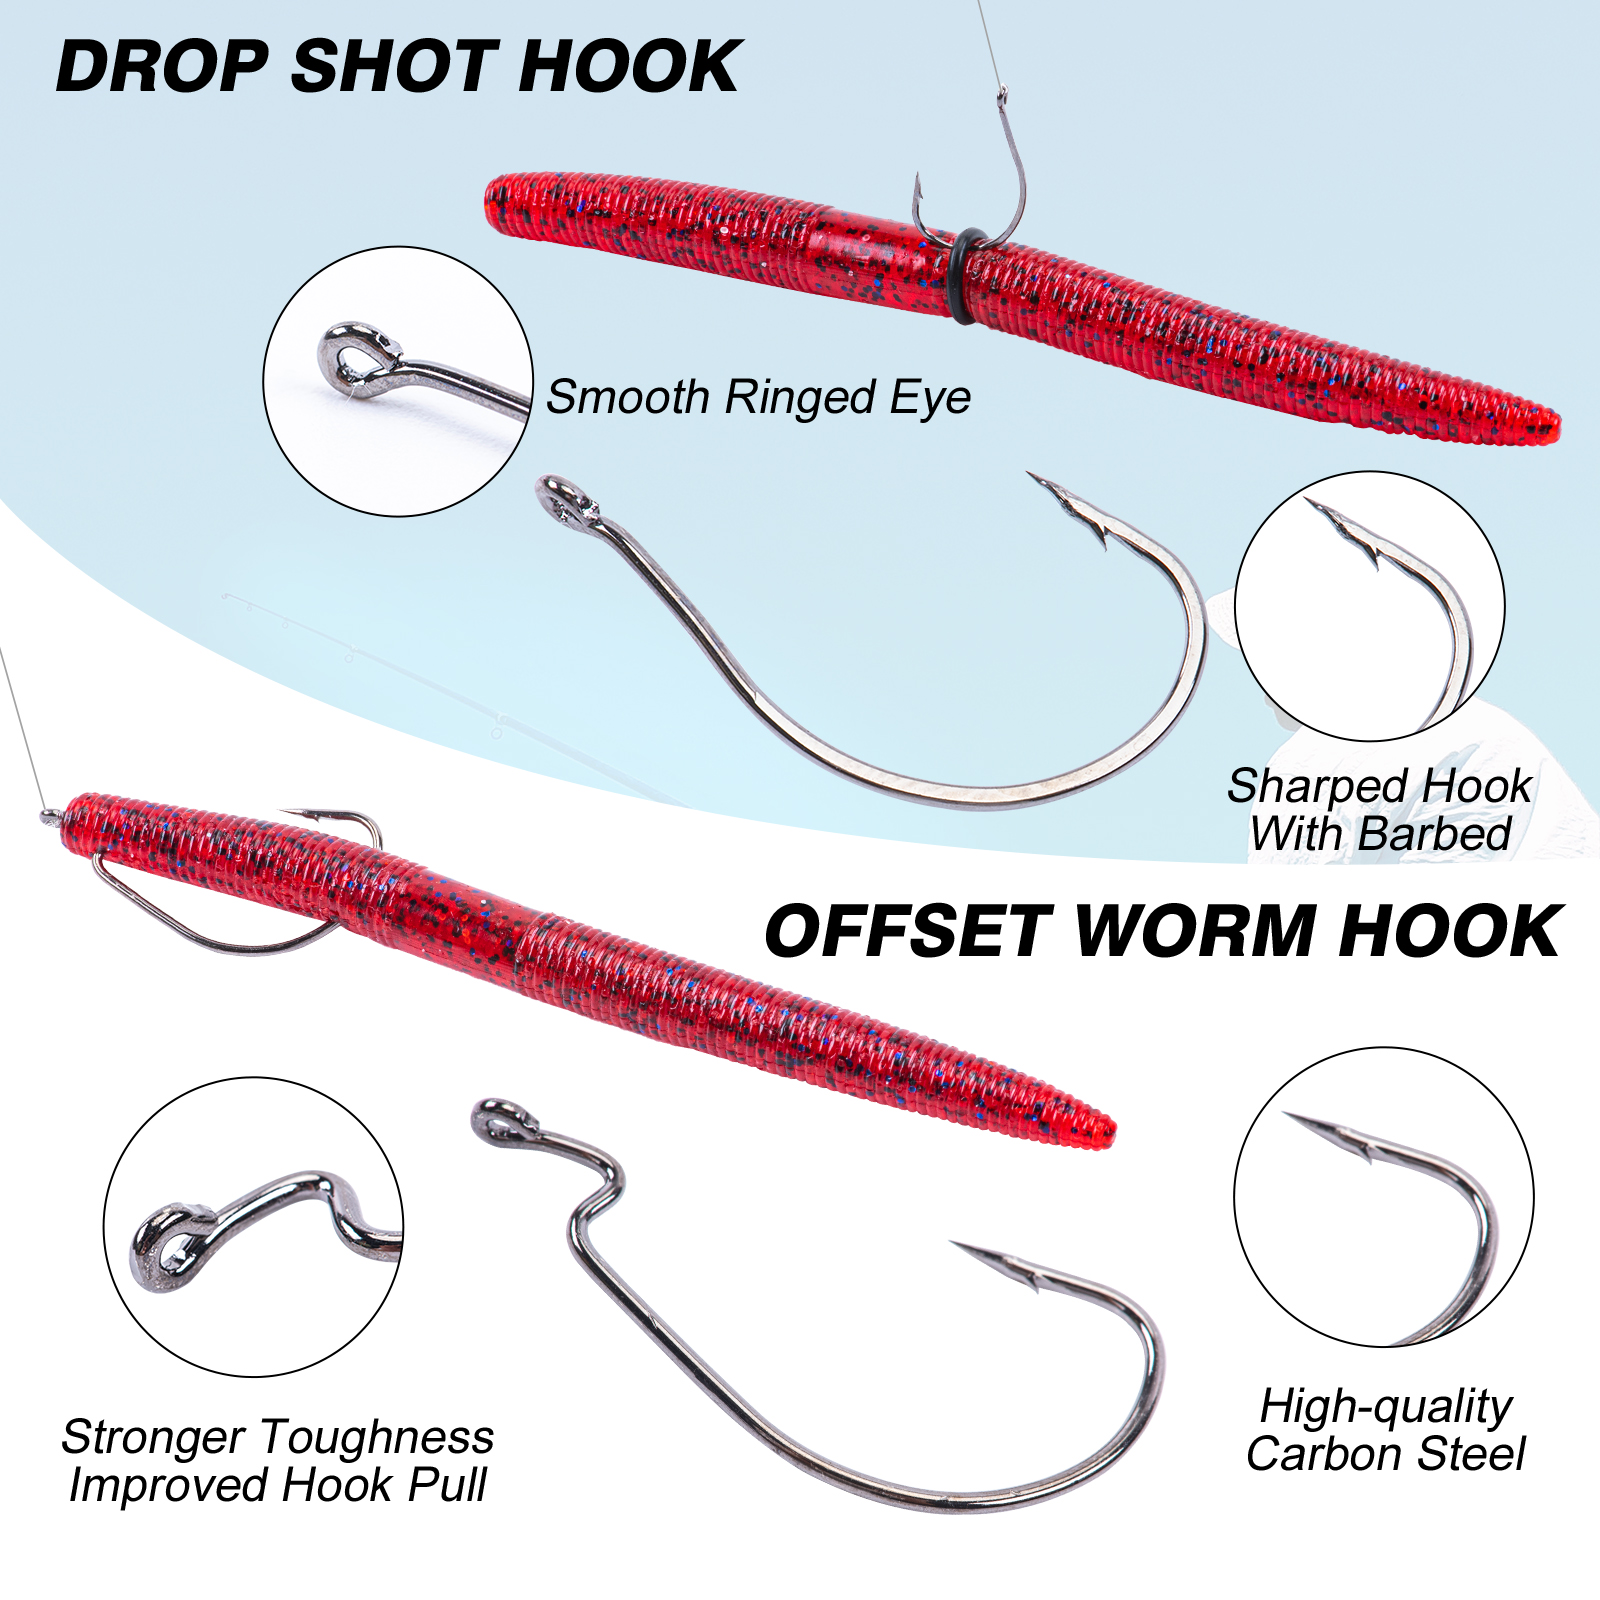 143pcs * Bass Fishing * Tool Kit - Senko Worms, O-Rings, Hooks, Beads &  Weights - Perfect for Drop Shot & Drop Shot Hooks!